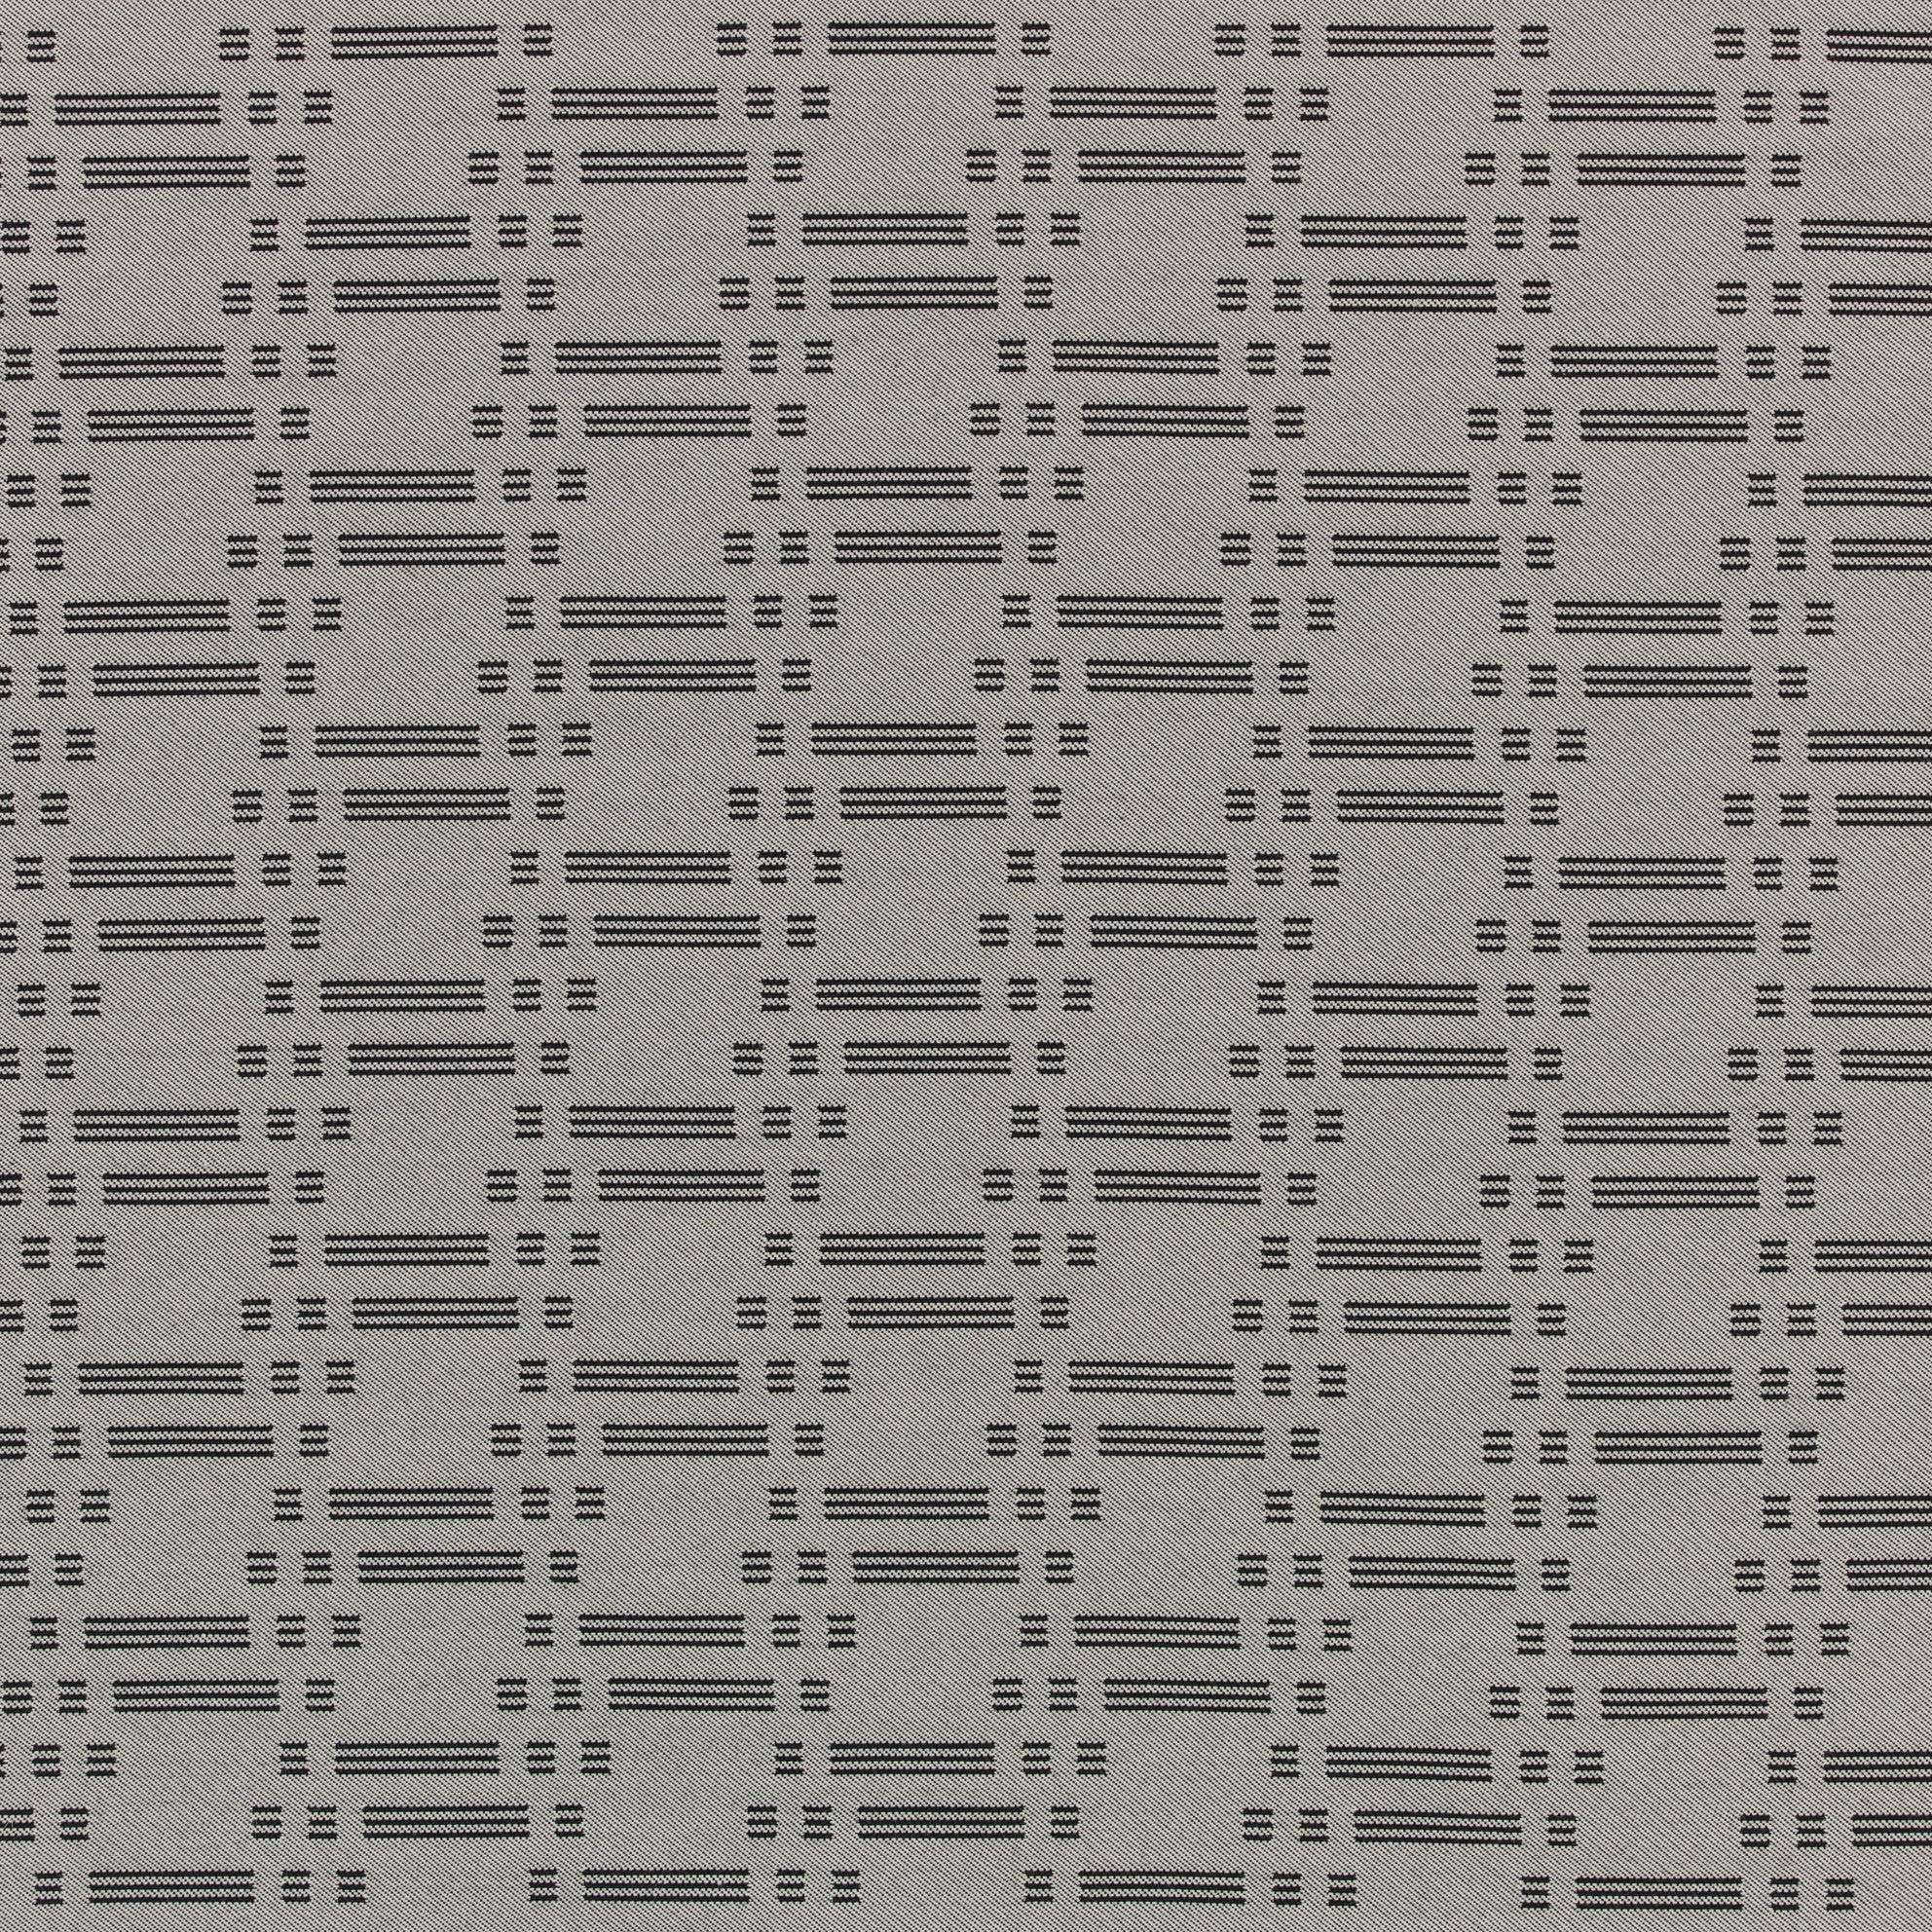 Triton Contract Furnishing Fabric - Black Reverse | Nicholas Engert Interiors